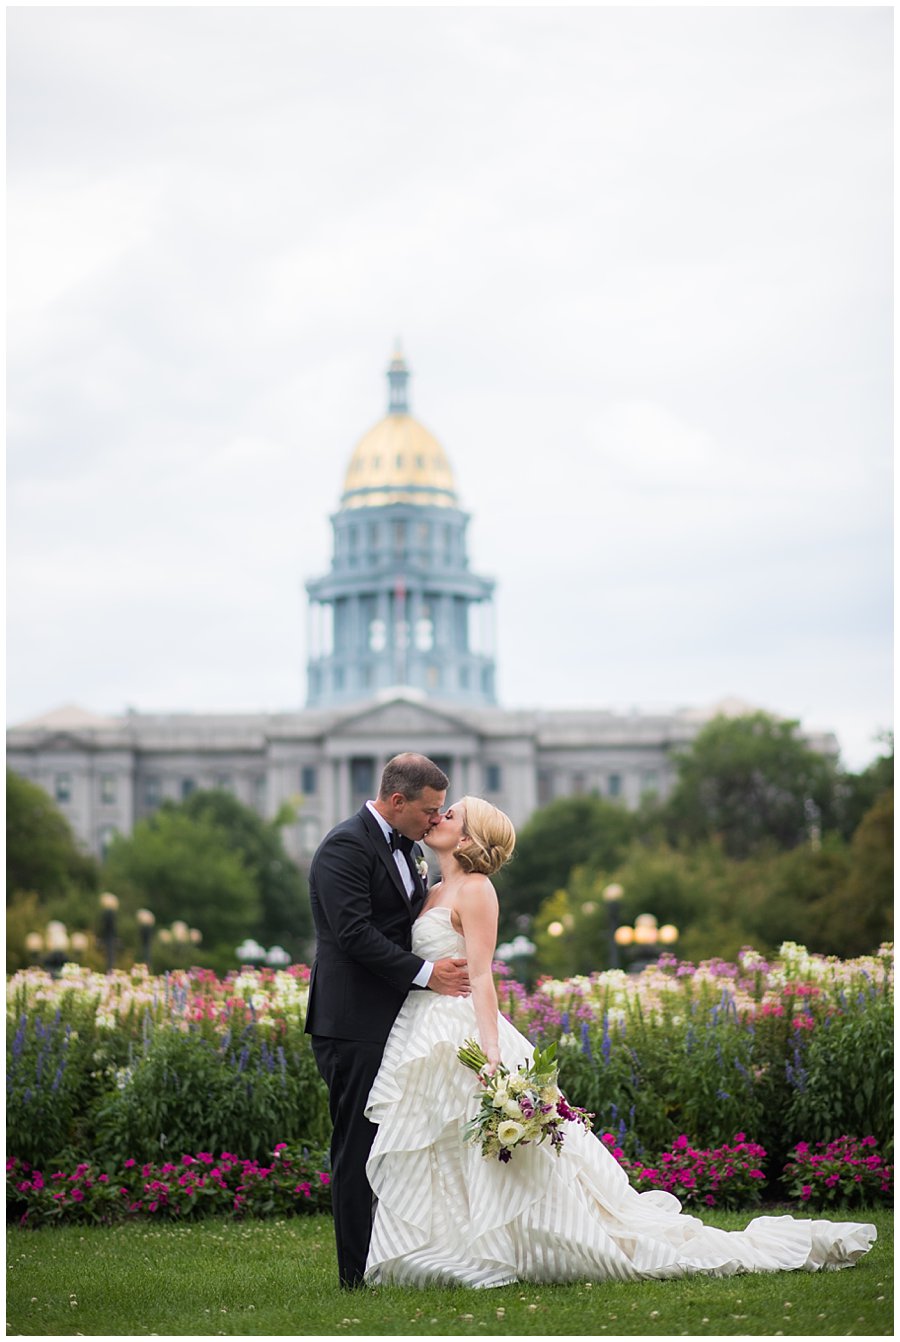 Civic Center wedding portrait in front of Denver Capitol Building before blanc Denver wedding by Colorado Wedding Photographer Jennie Crate Photographer